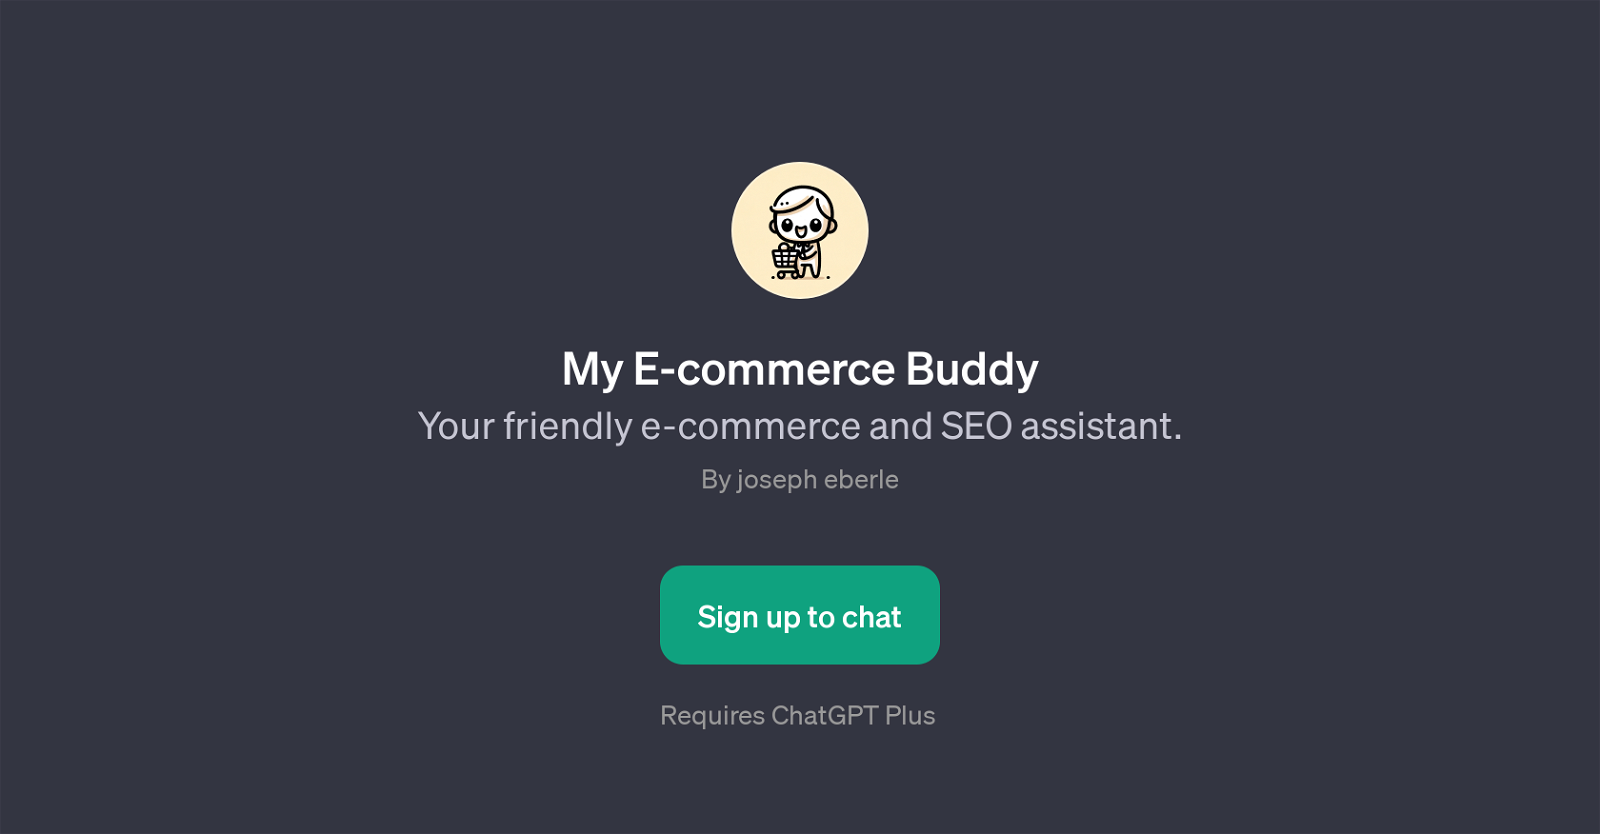 My E-commerce Buddy website